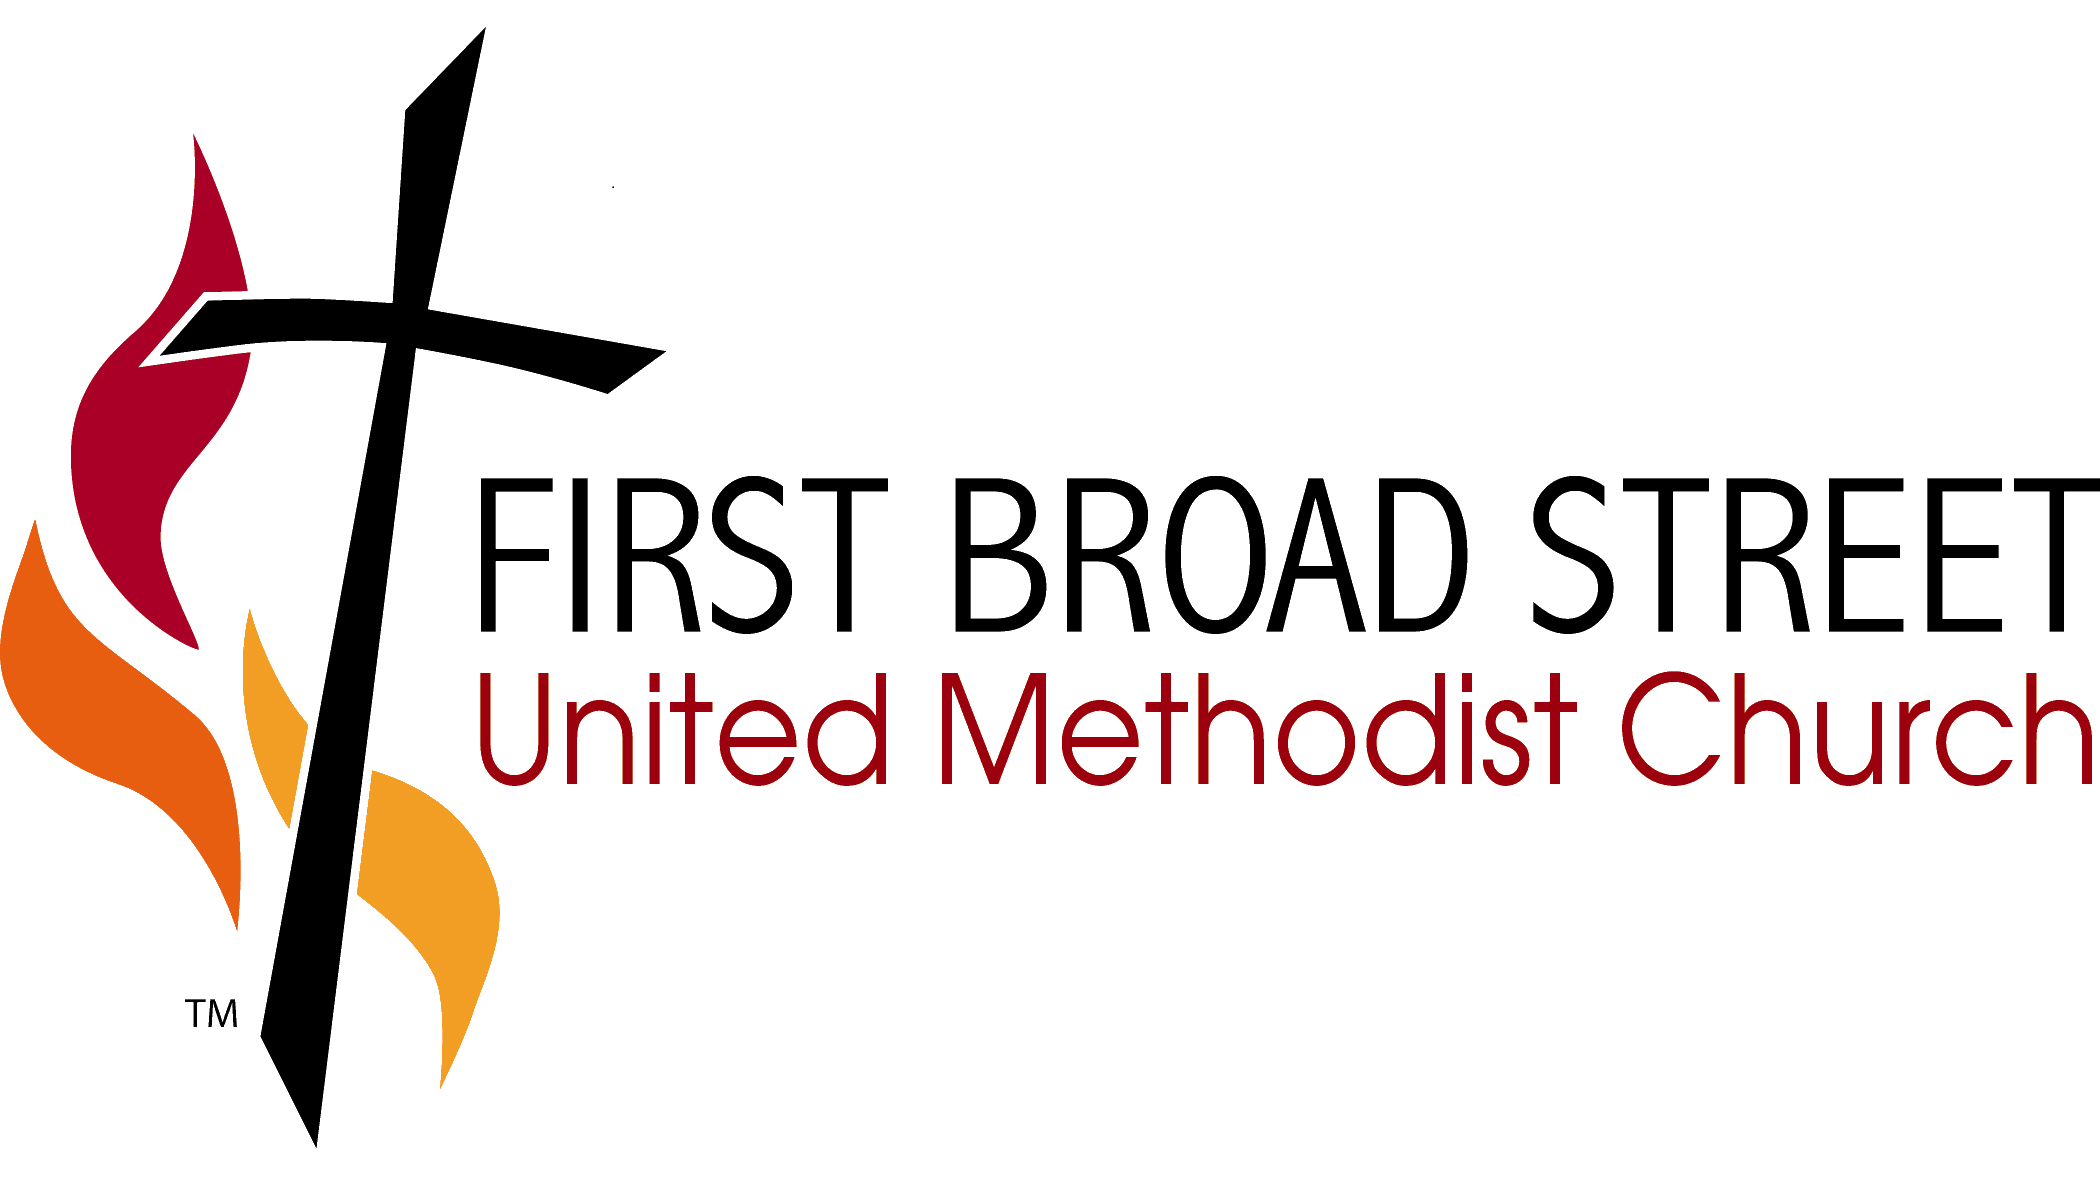 First Broad Street United Methodist Church